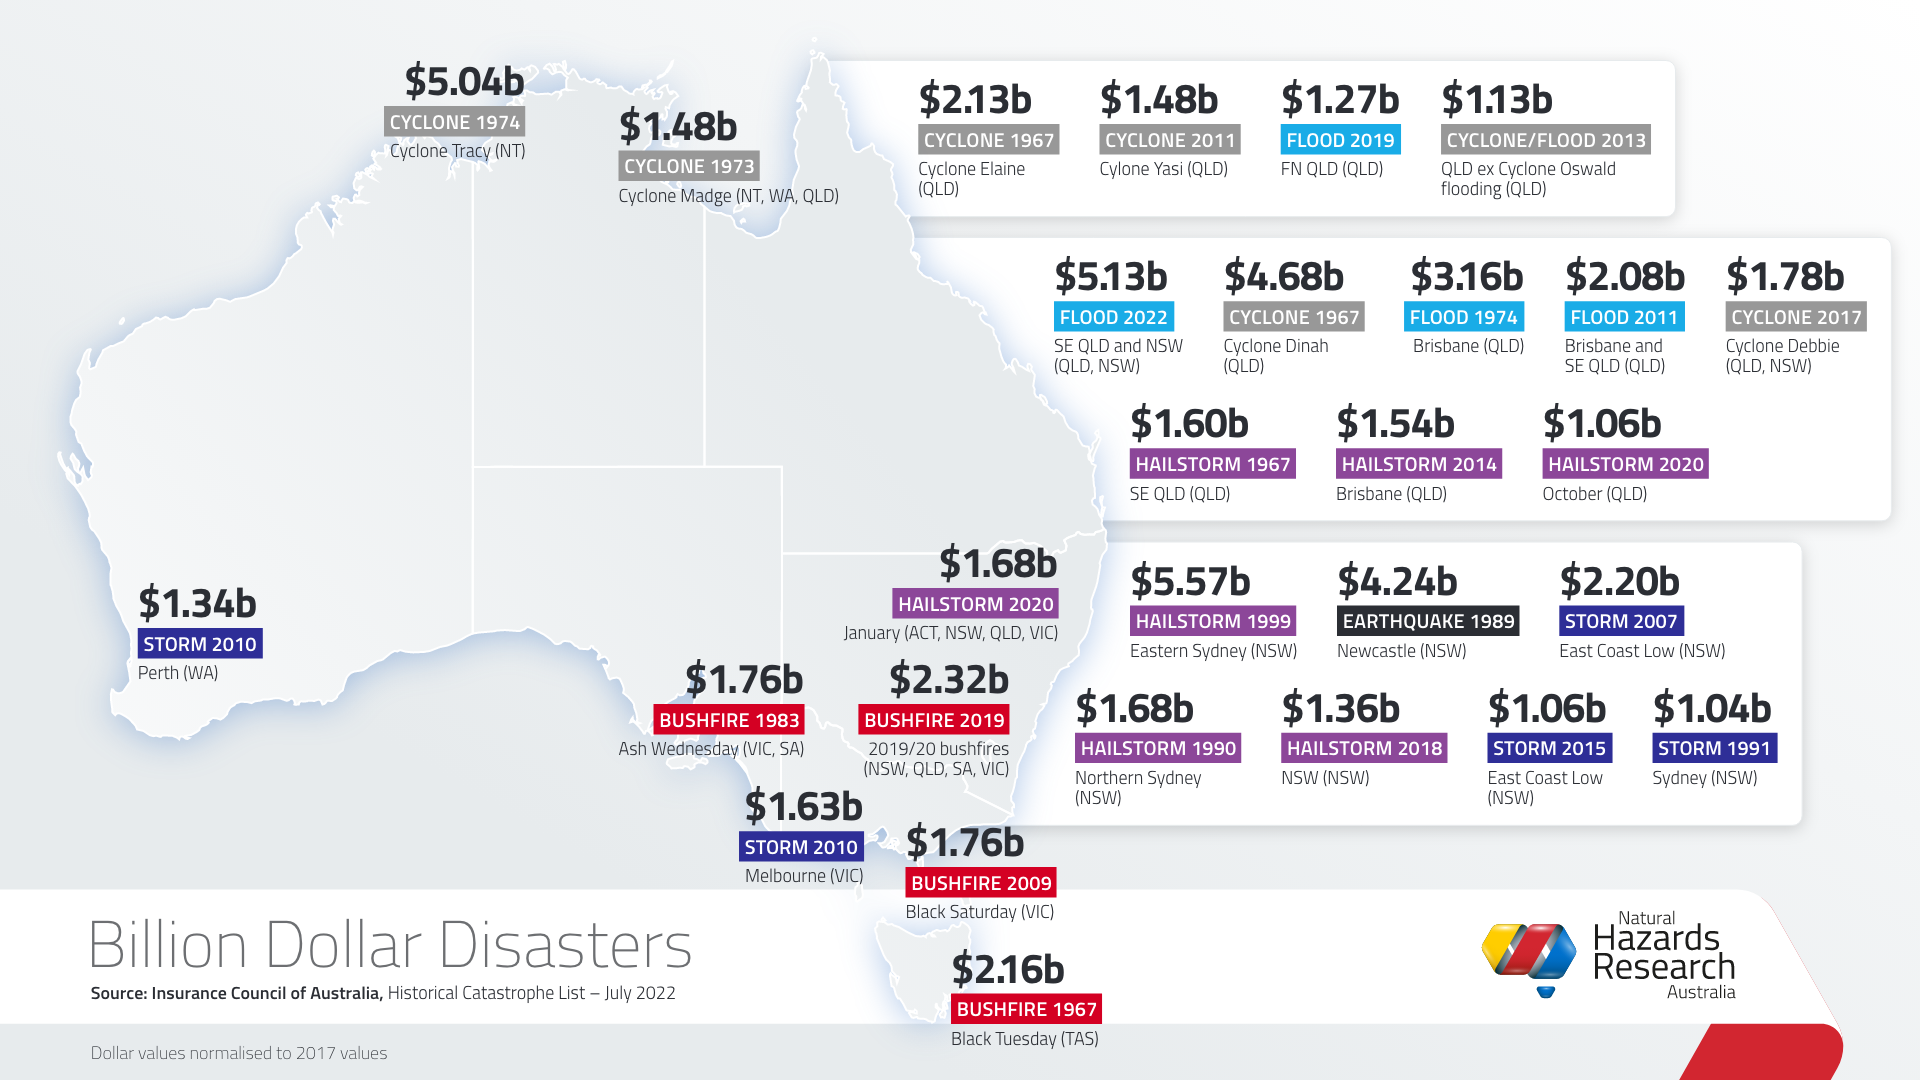 Billion dollar disasters in Australia